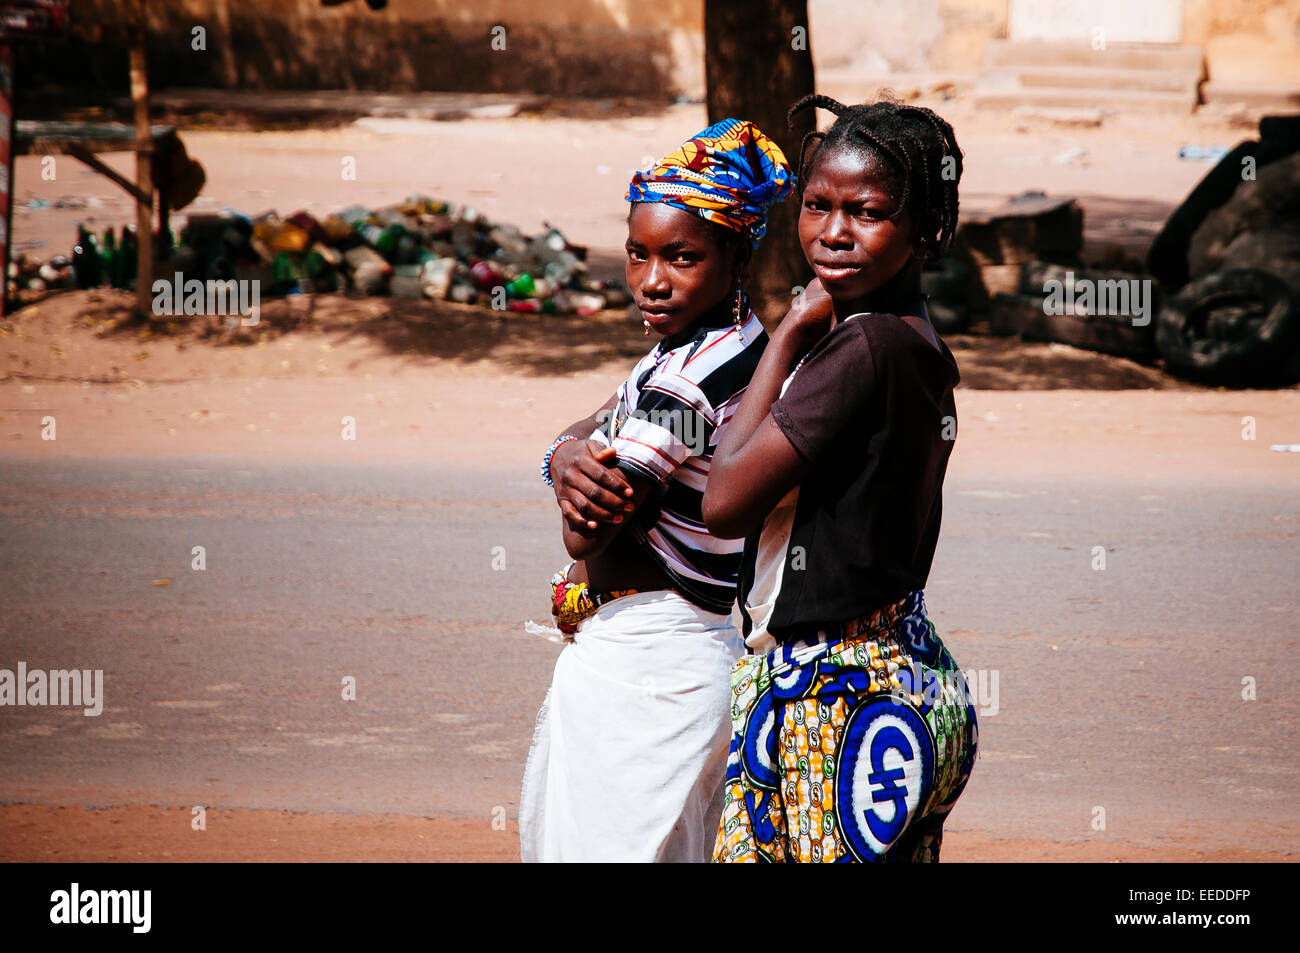 Portrait de deux jolies filles dans la rue. Burkina Faso Banque D'Images